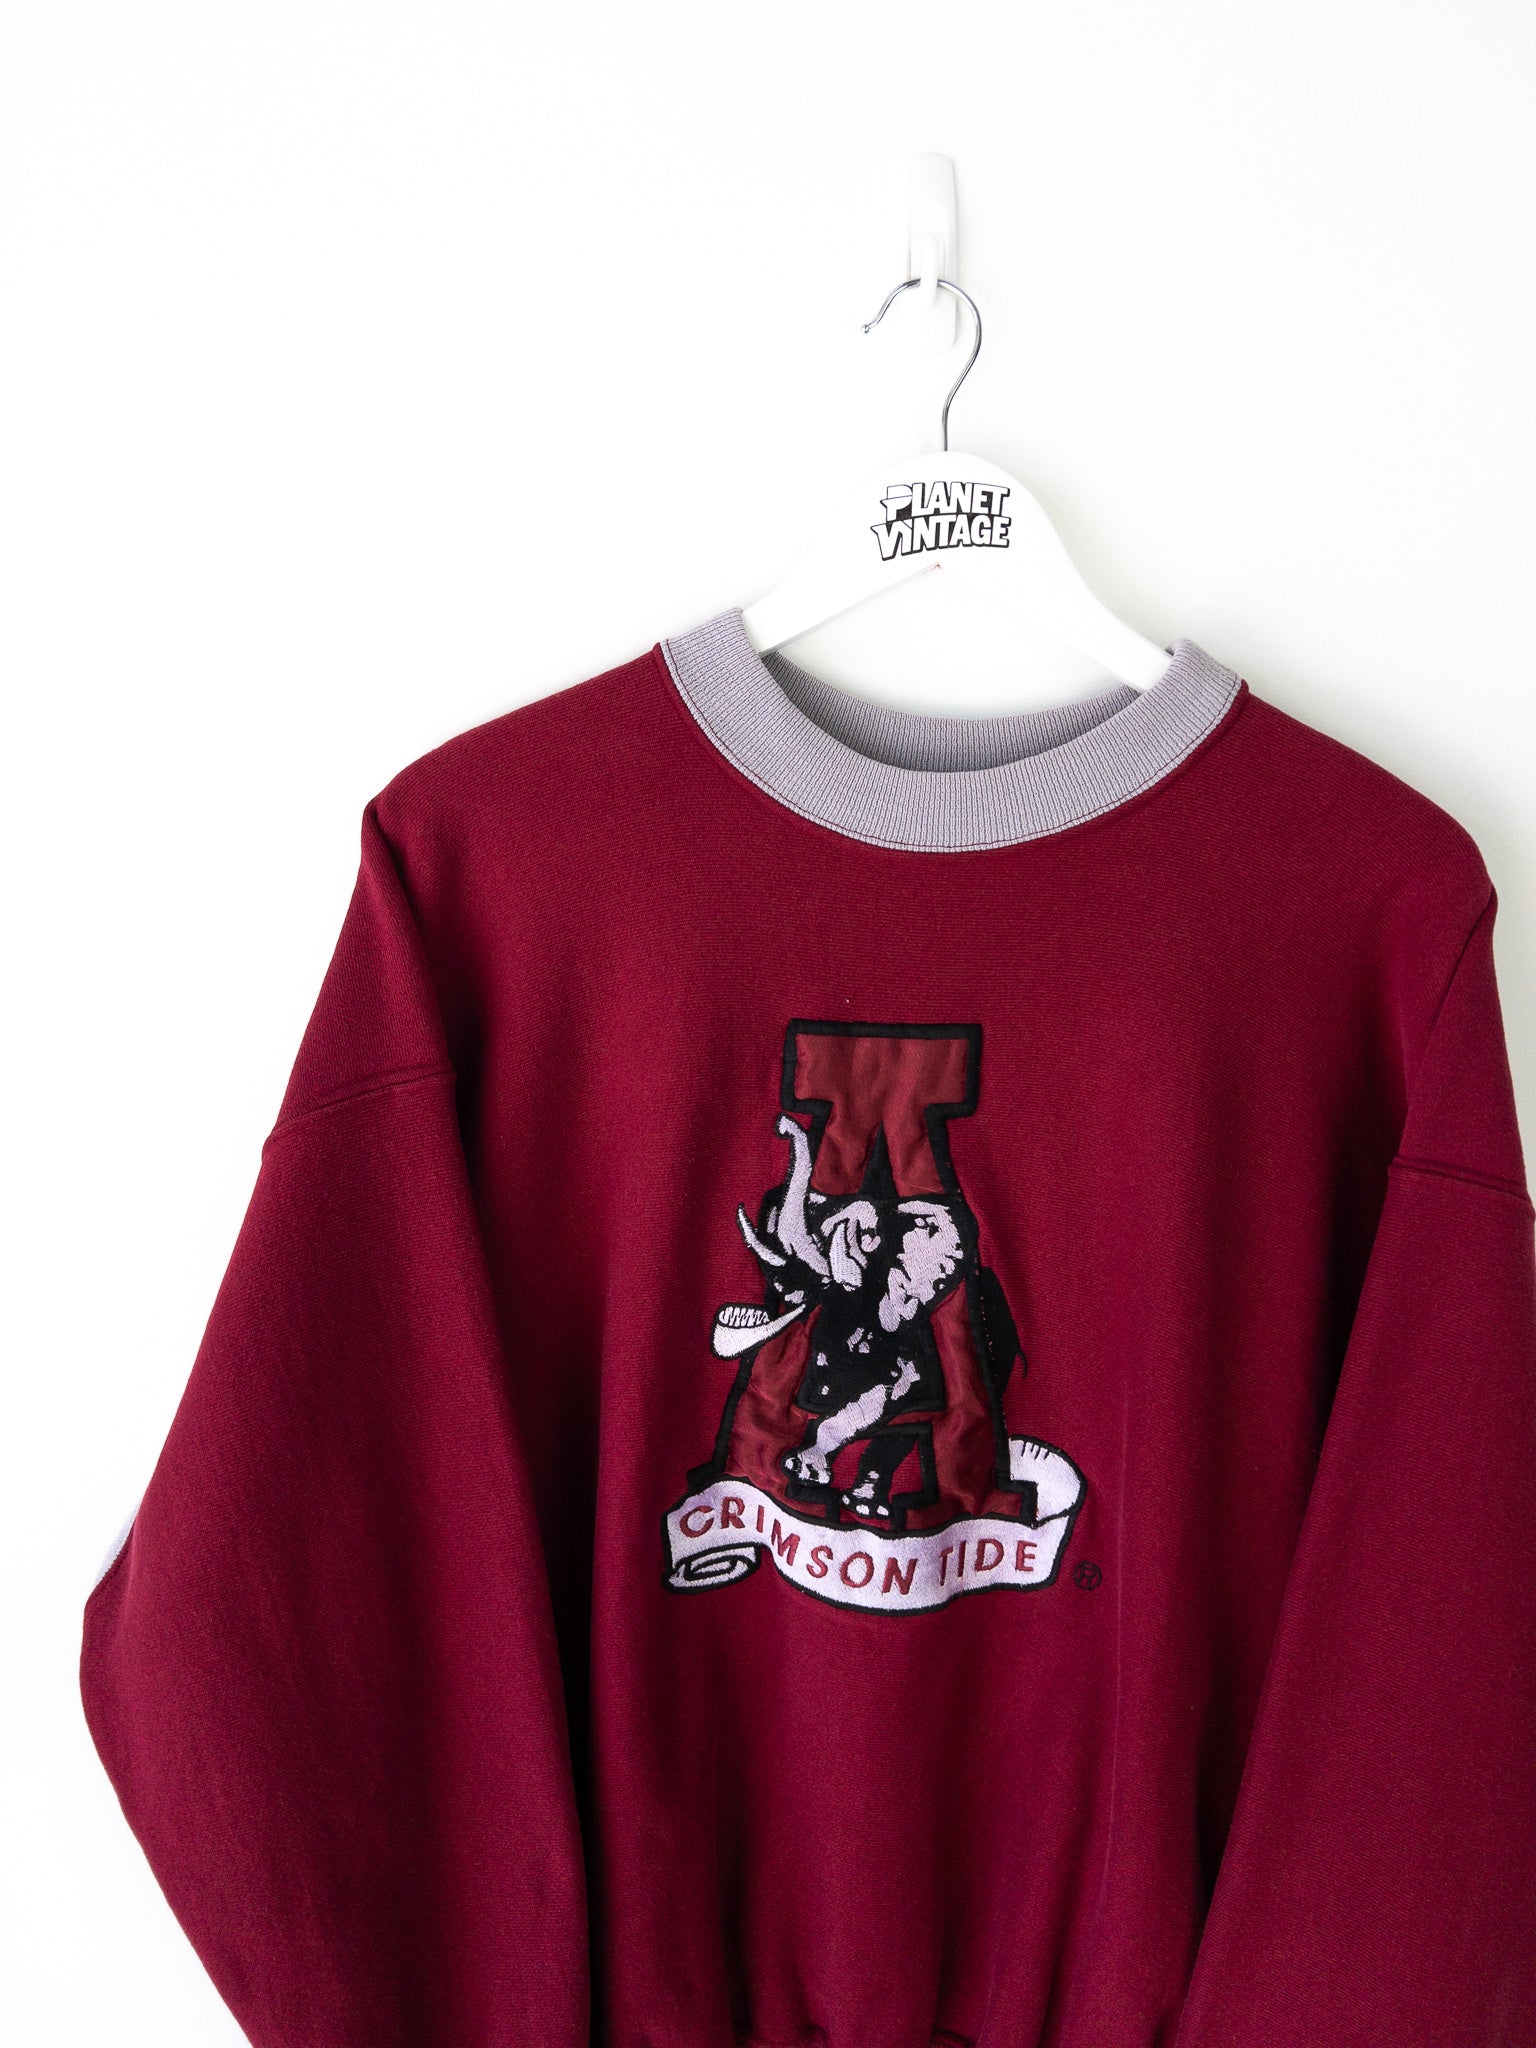 Vintage Alabama Crimson Tide Sweatshirt (L)